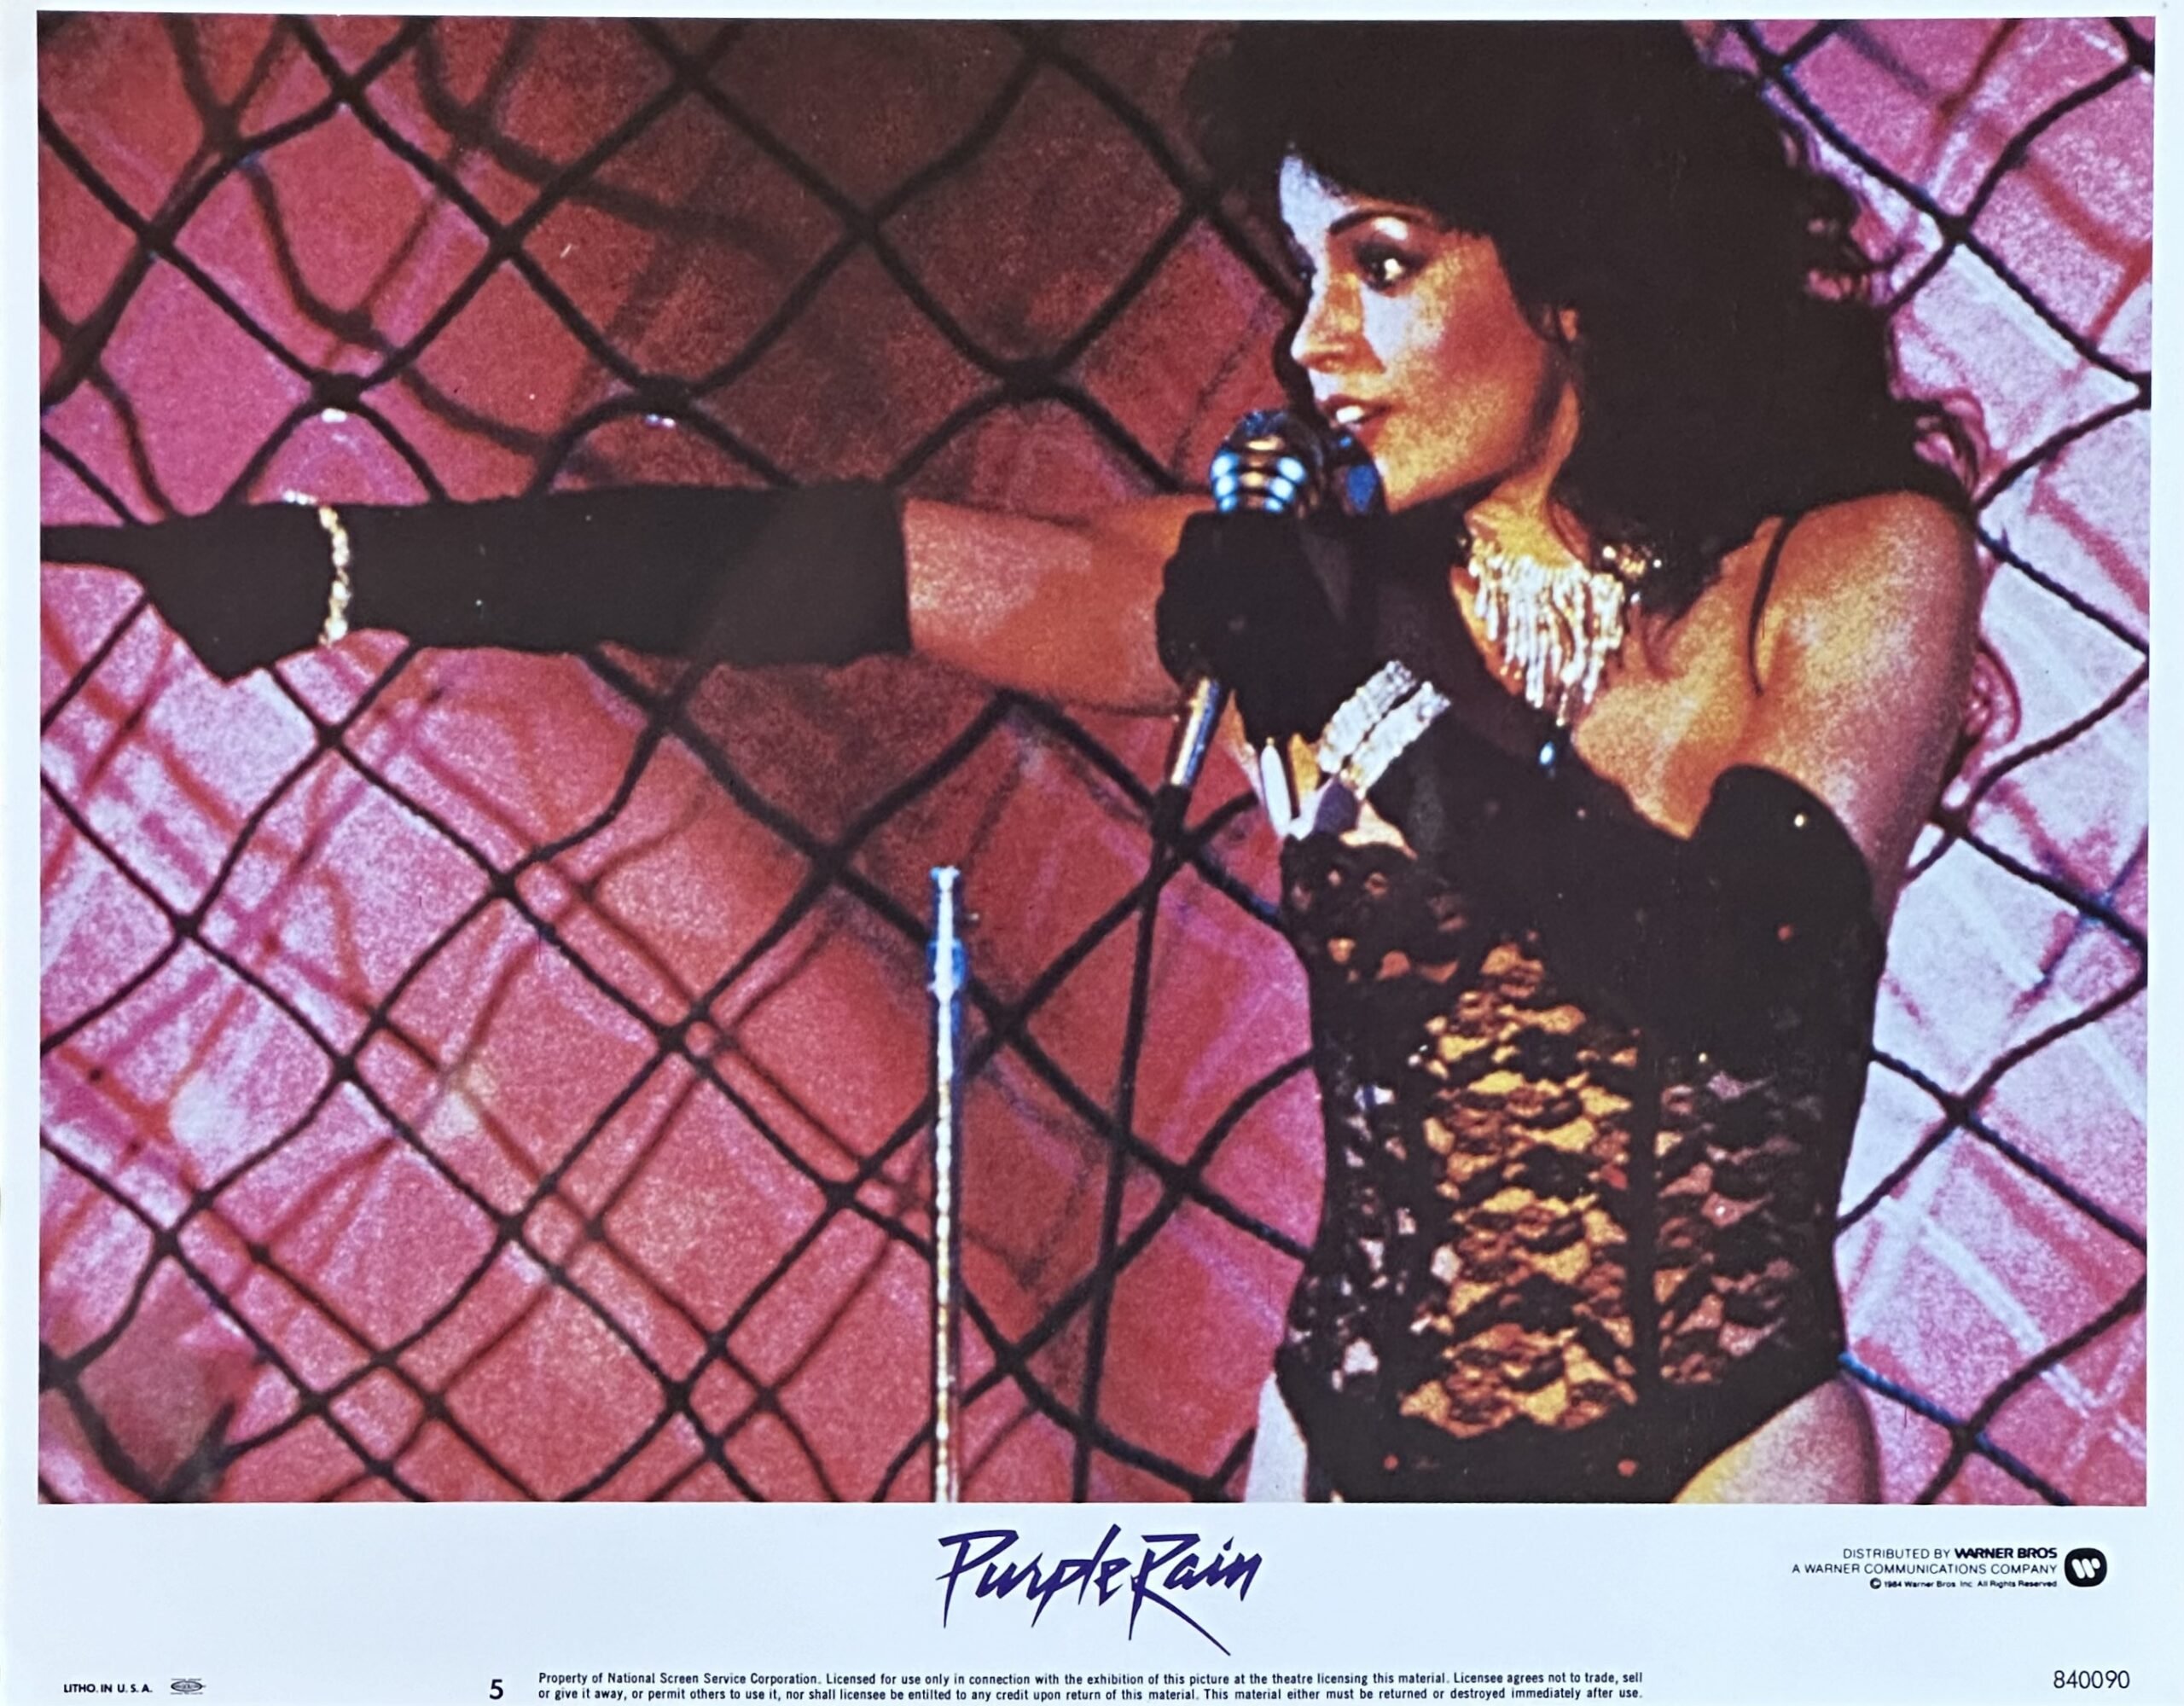 Original vintage cinema lobby card movie poster for Prince in Purple Rain